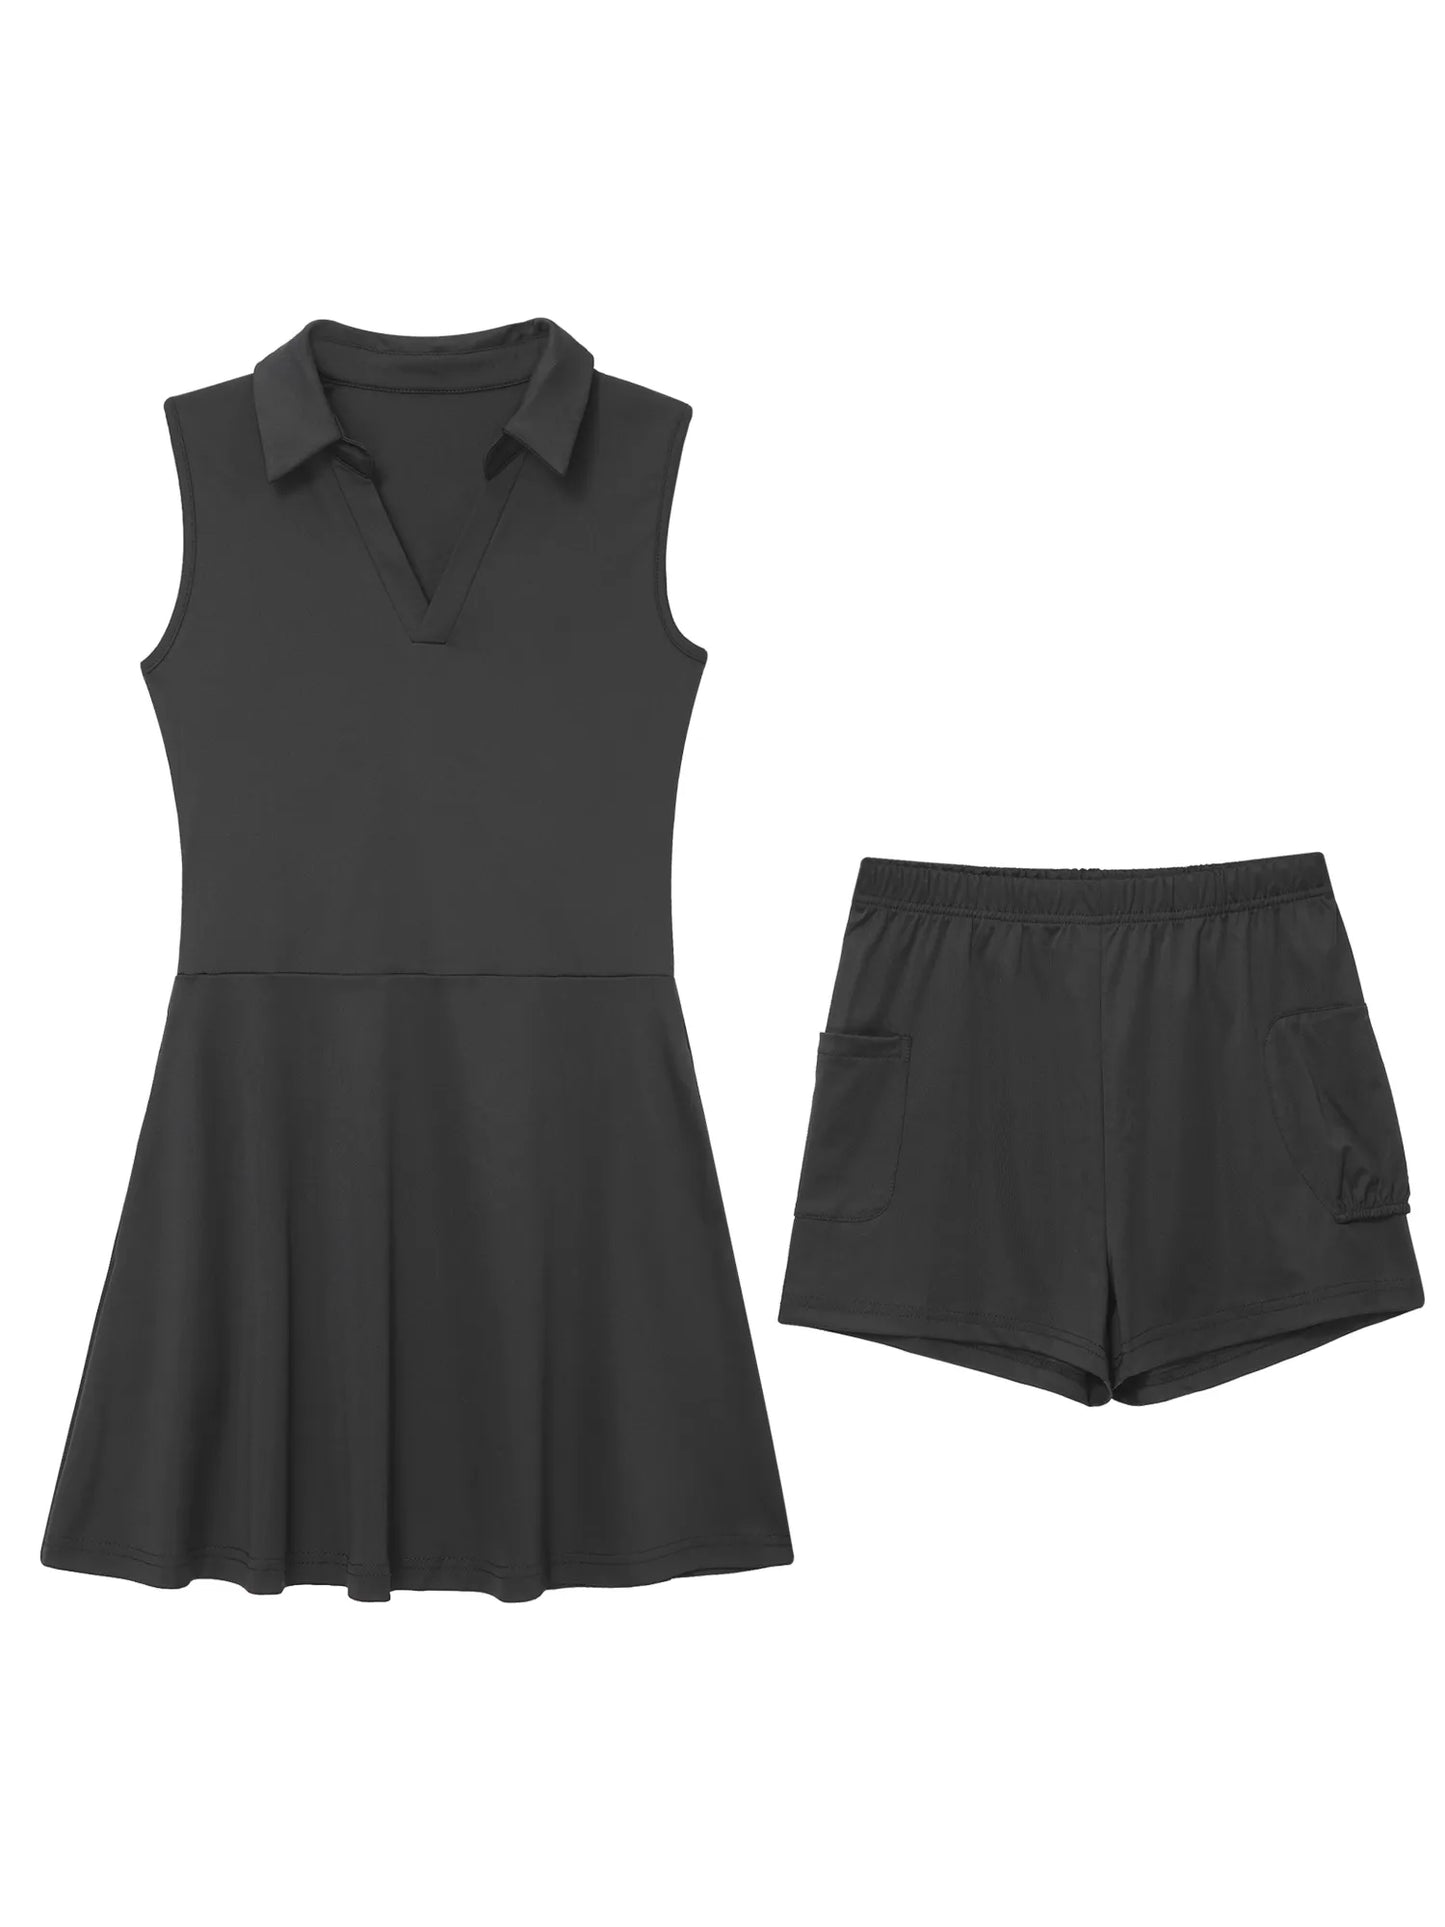 Women Sleeveless Collared With Pocket Golf Tennis Above Knee Length Sport Tennis Dress